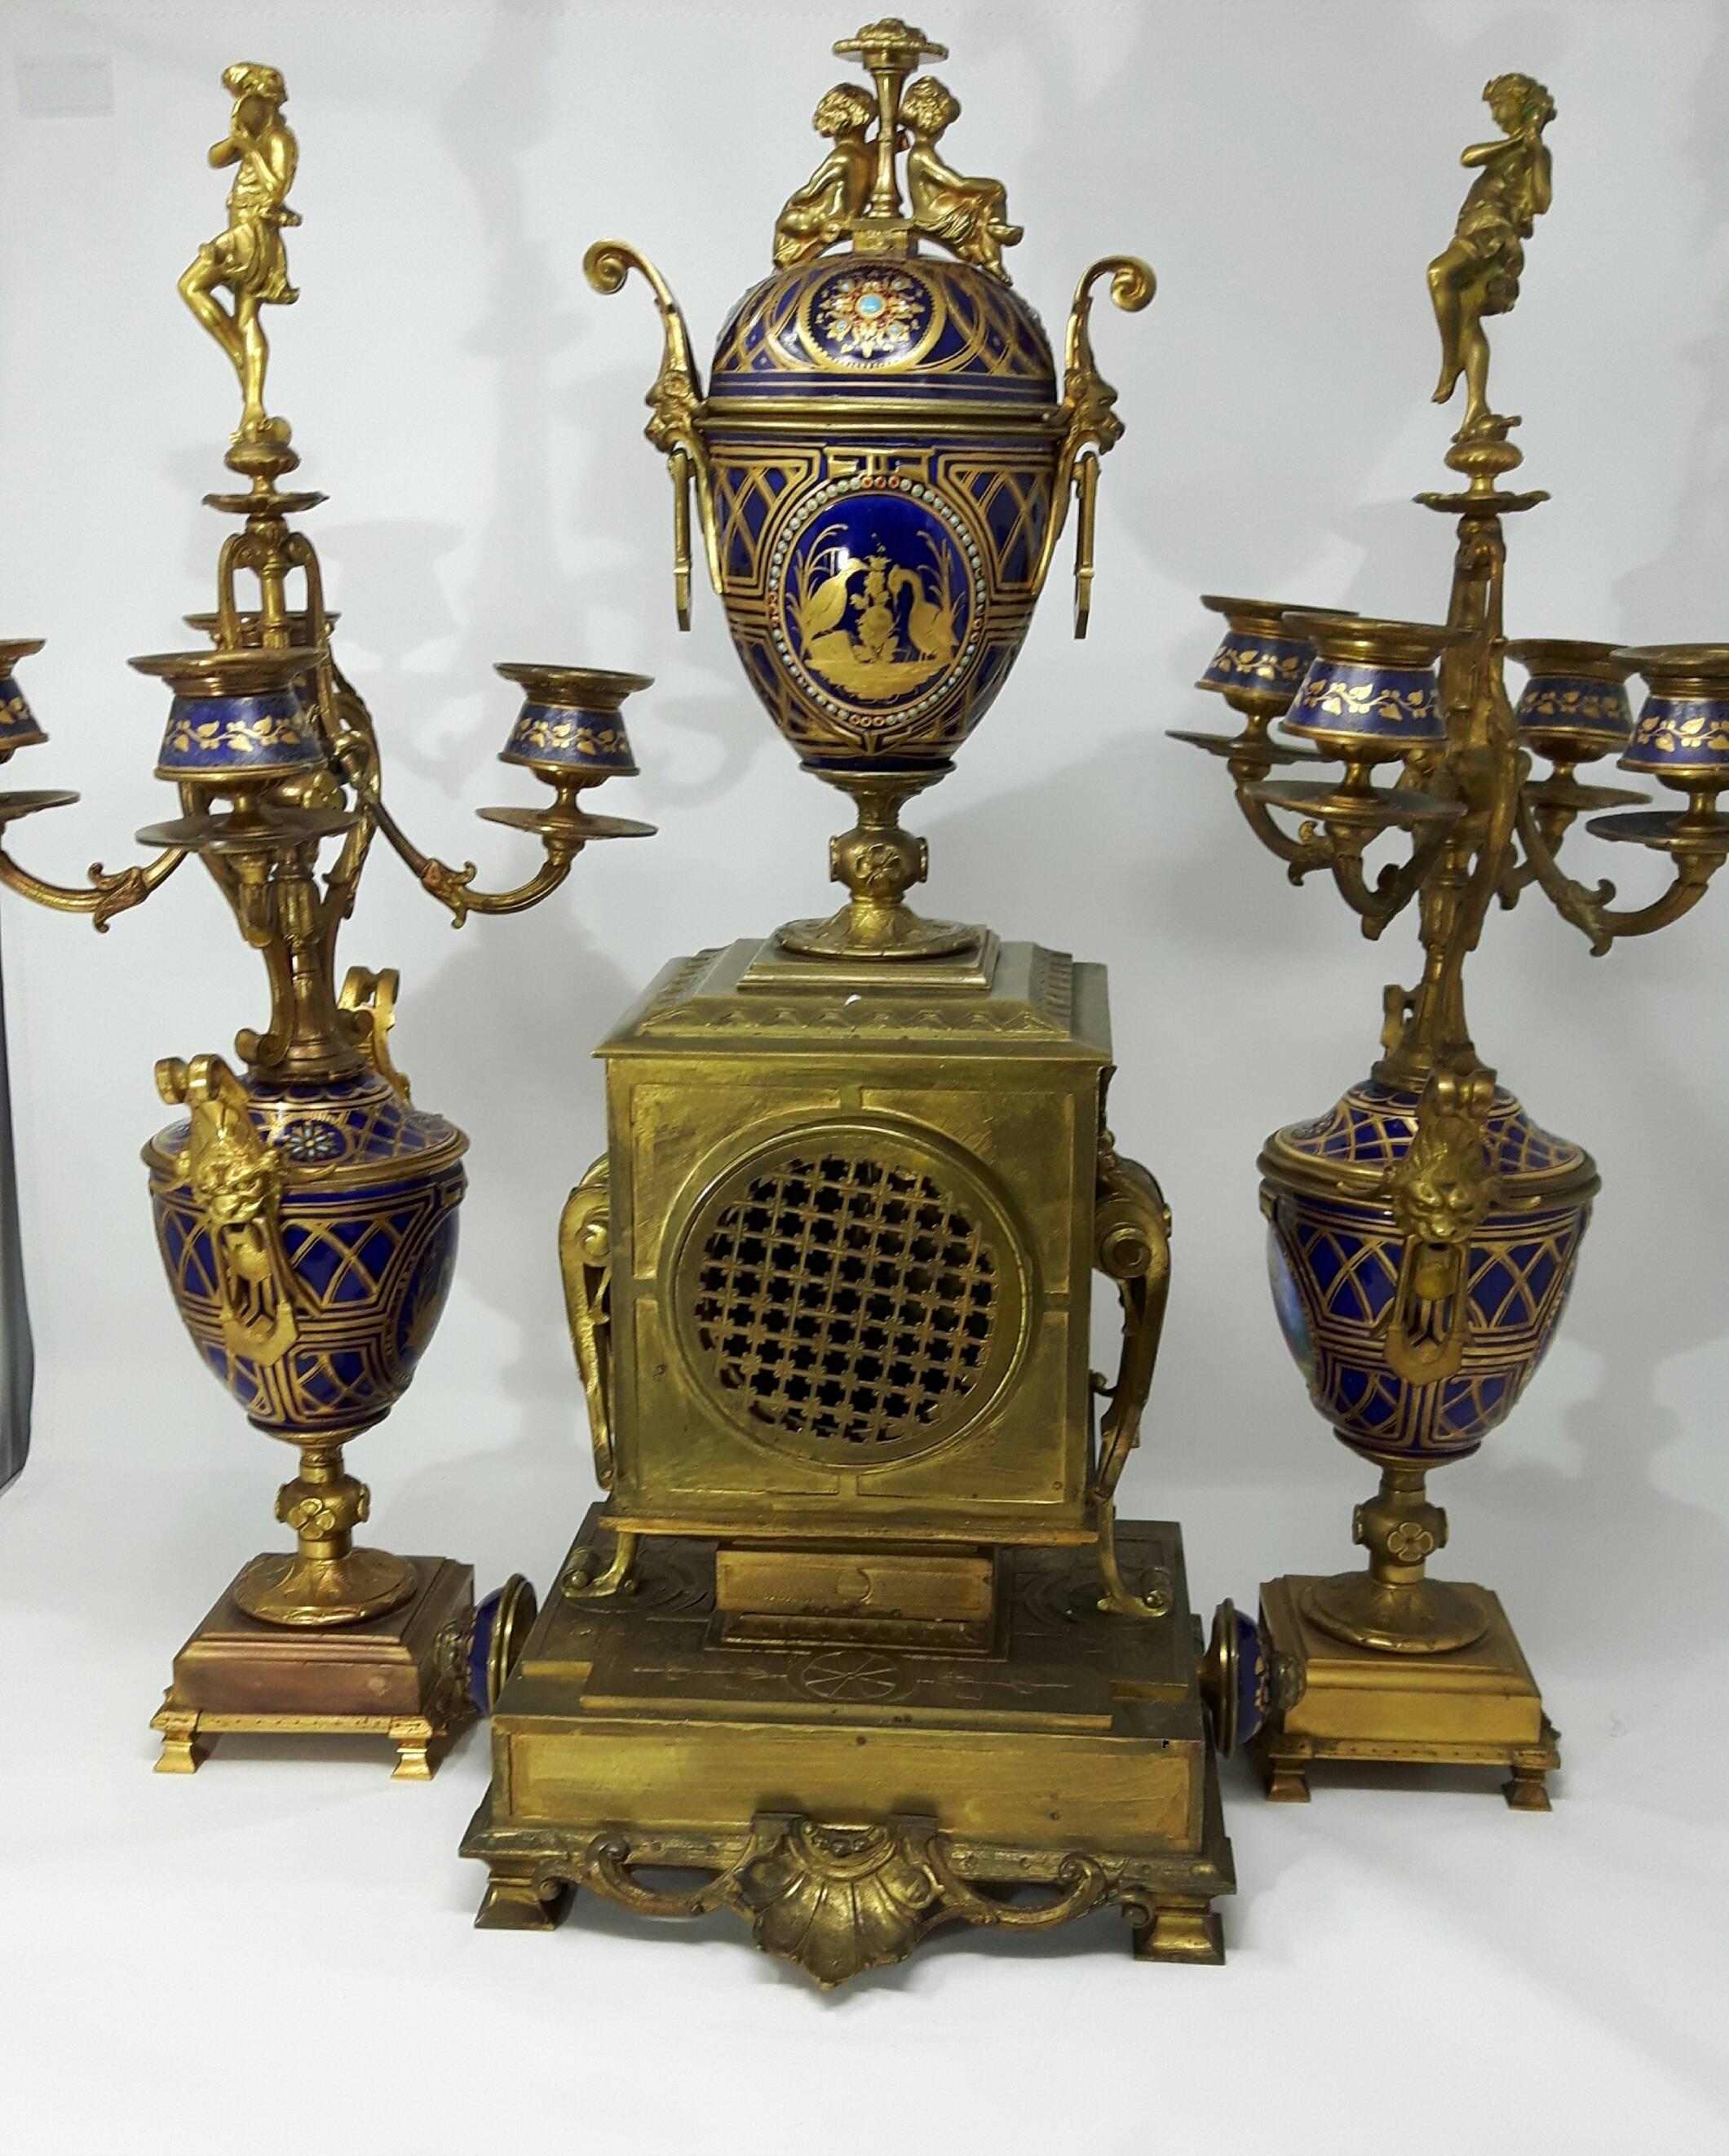 Cast 19th Century French Provincial Three-Piece Jeweled Clock Set